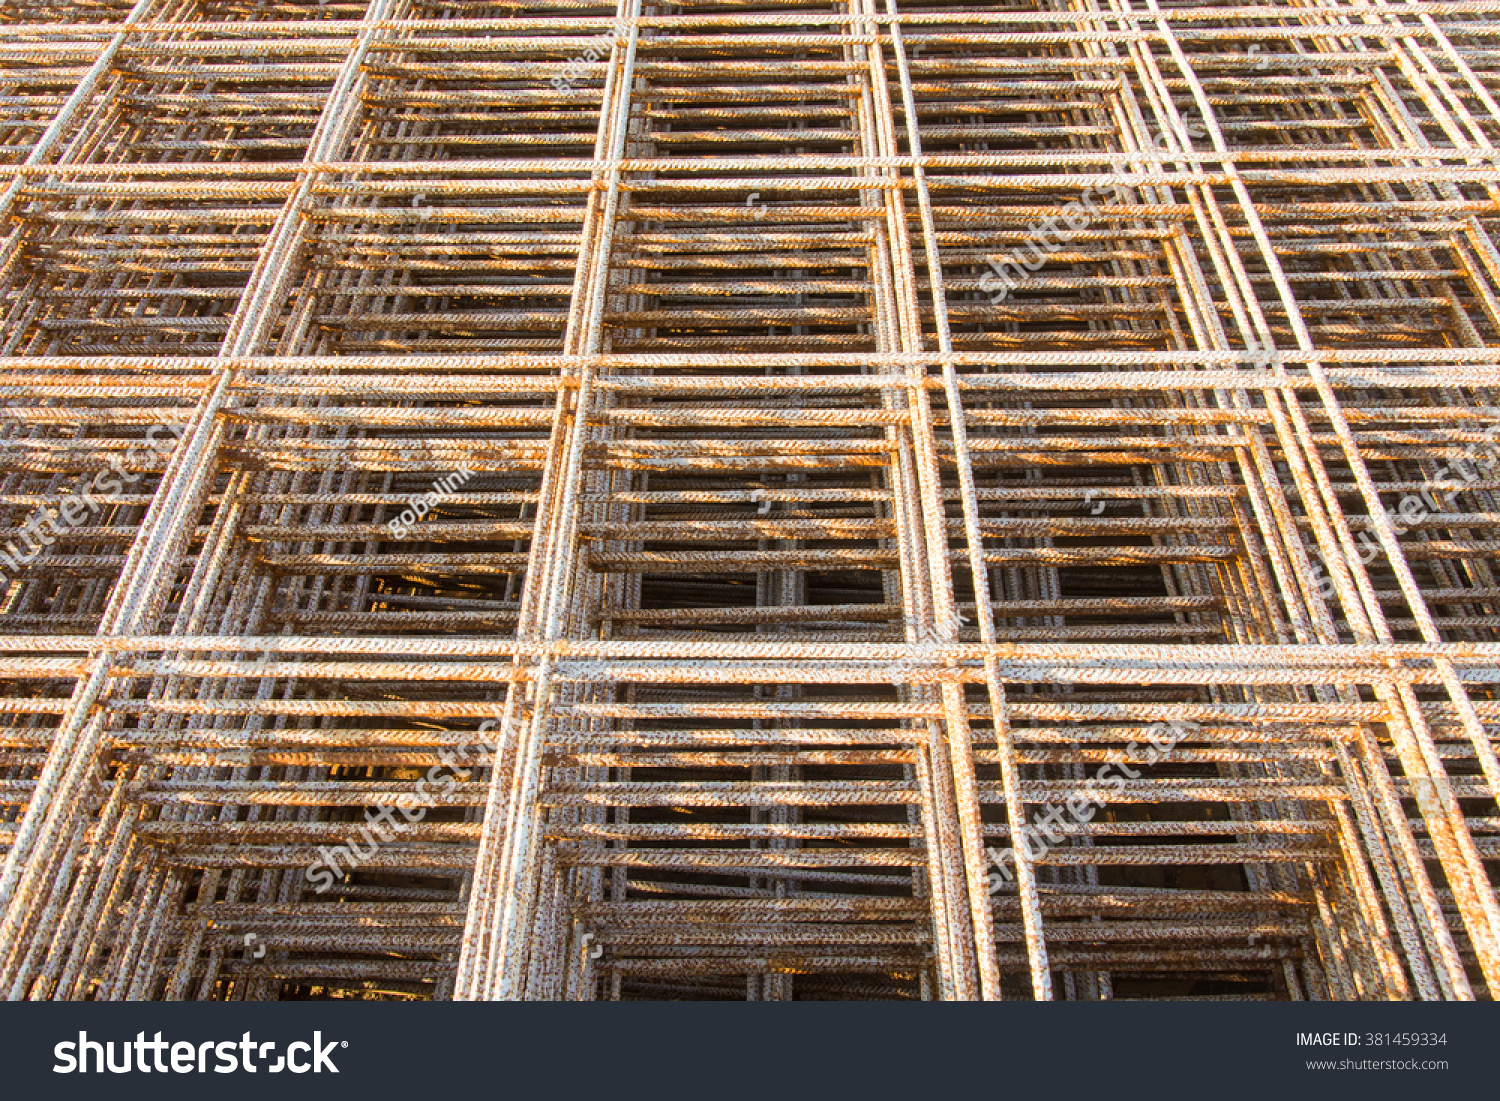 Steel Wire Mesh Construction Site Stock Photo 381459334 - Shutterstock